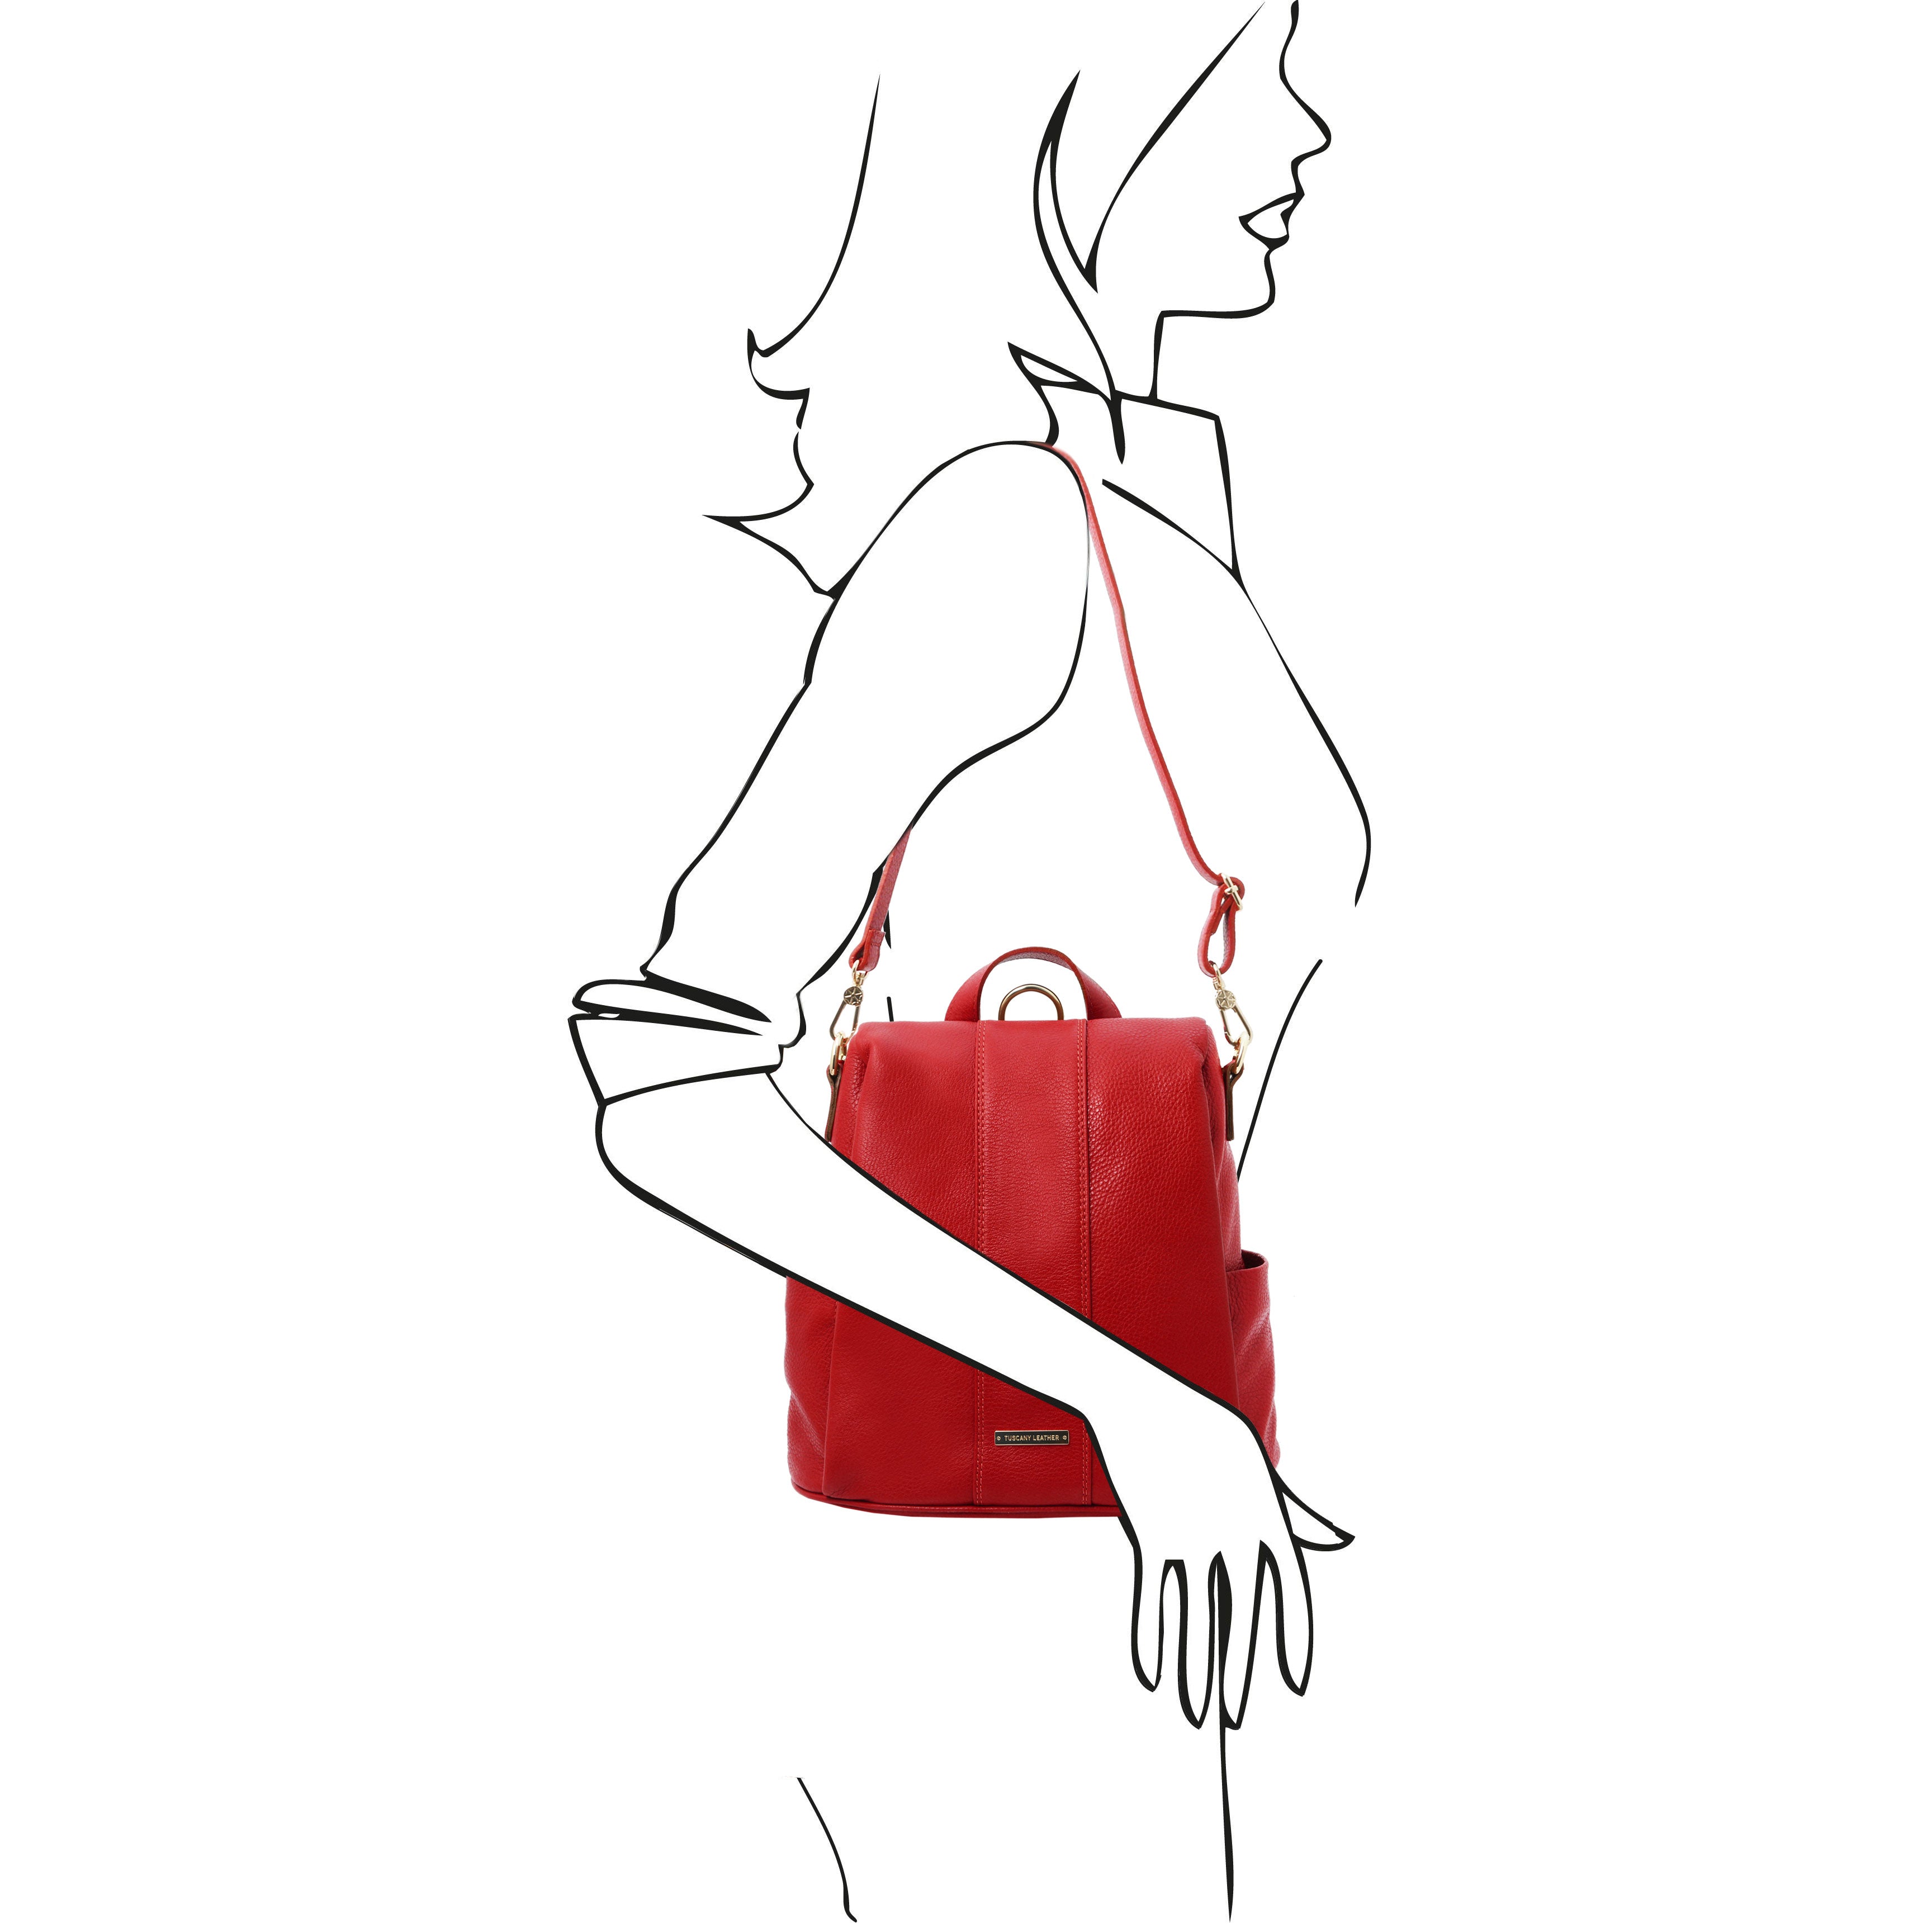 Tuscany Leather rugtas zacht leer TL Bag rood tas aan schouder